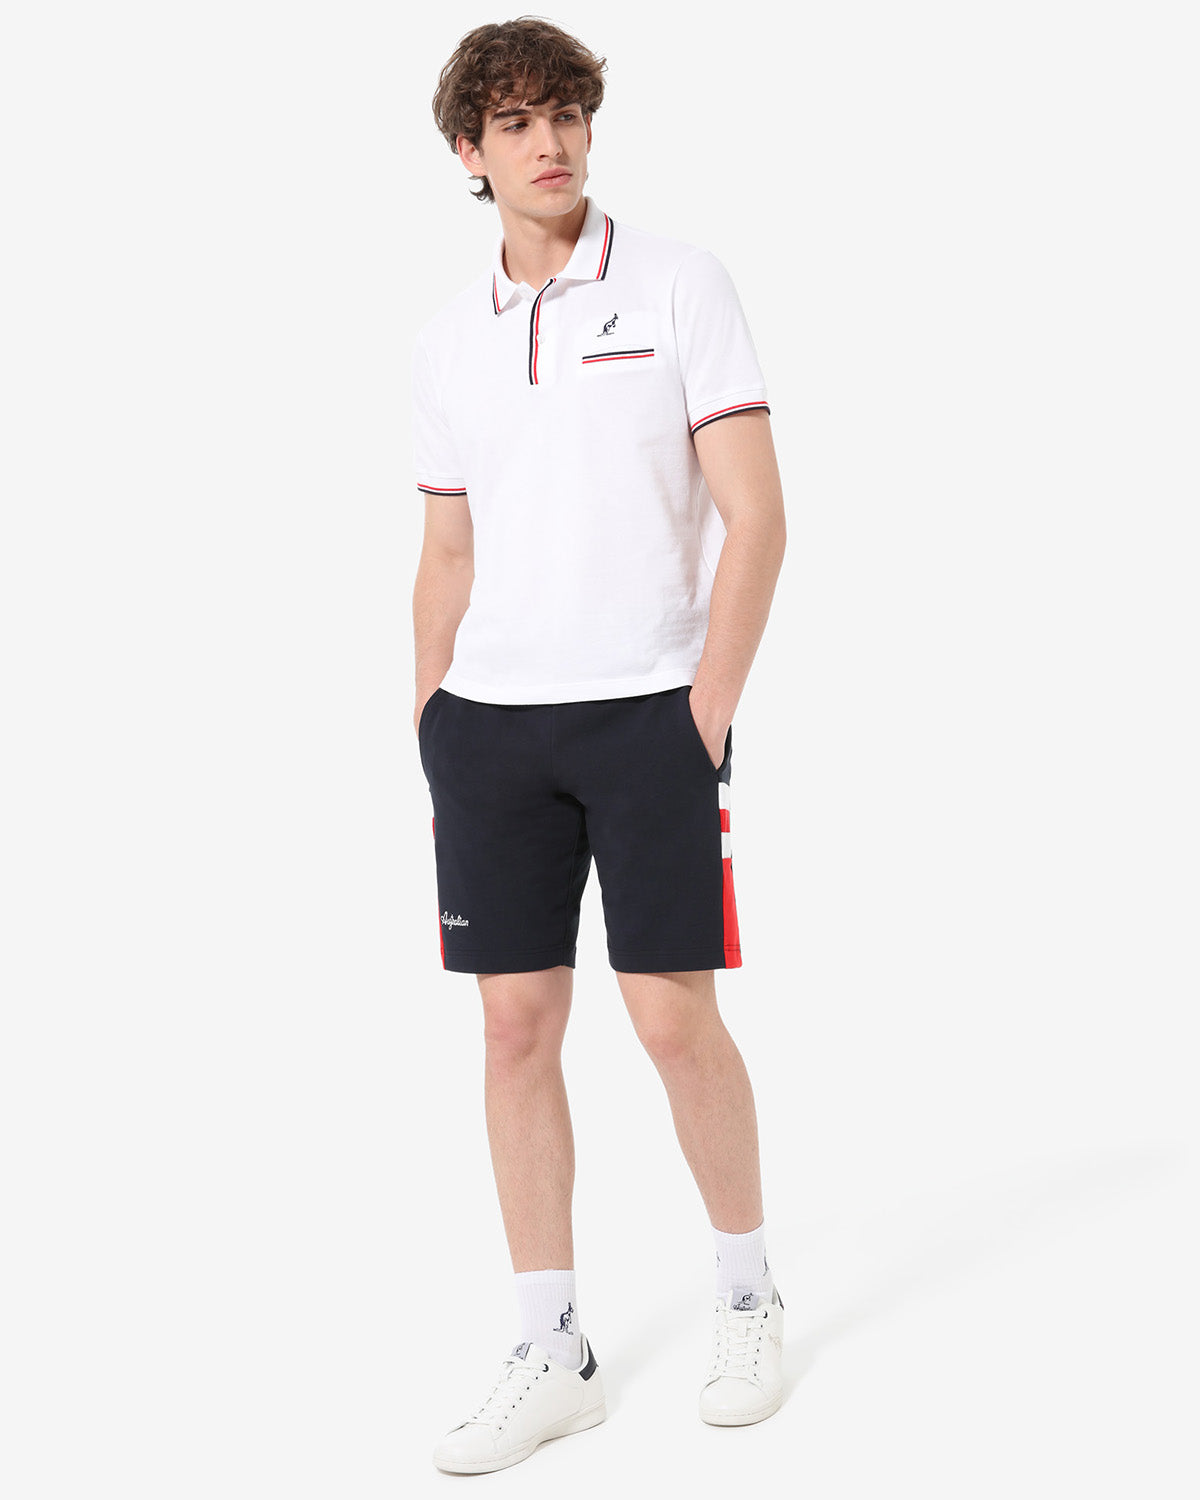 Pocket Piquet Polo Shirt: Australian Sportswear